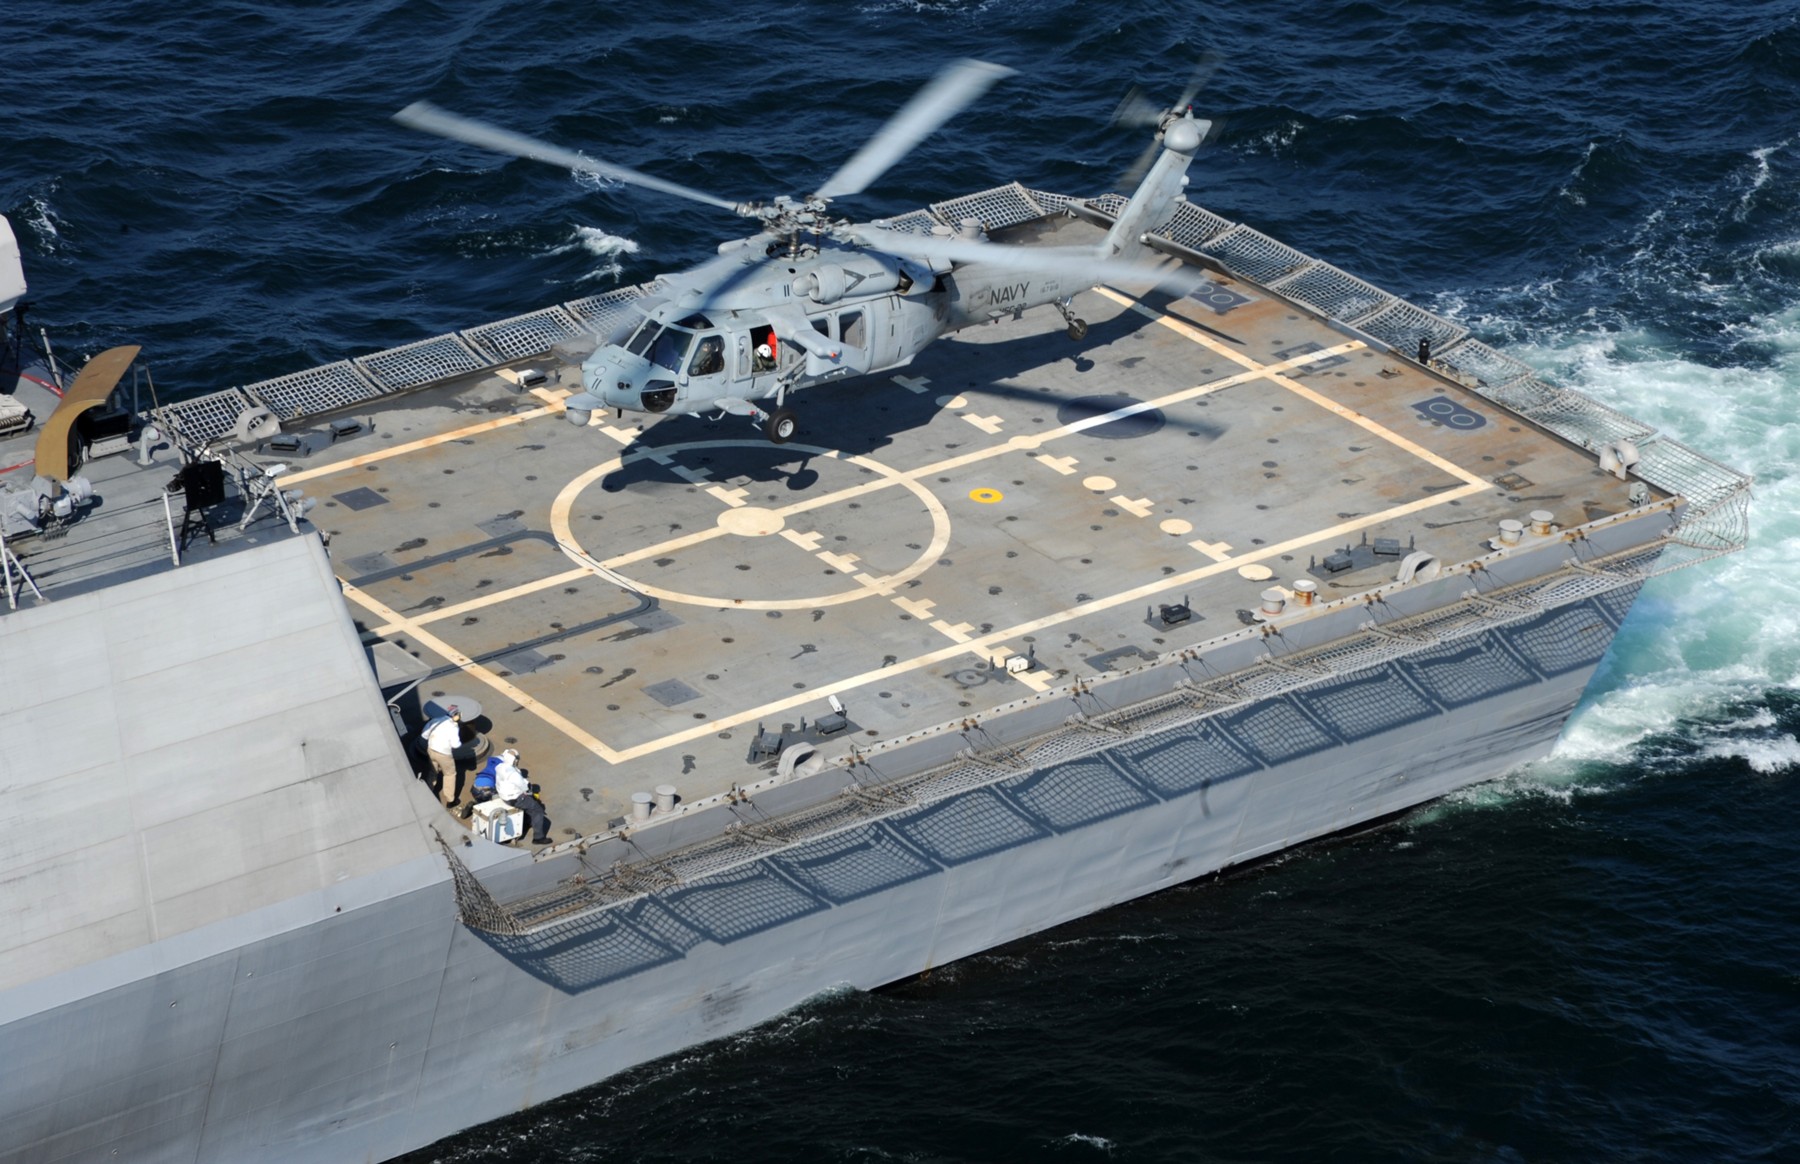 lcs-1 uss freedom class littoral combat ship us navy 101 flight deck mh-60 seahawk